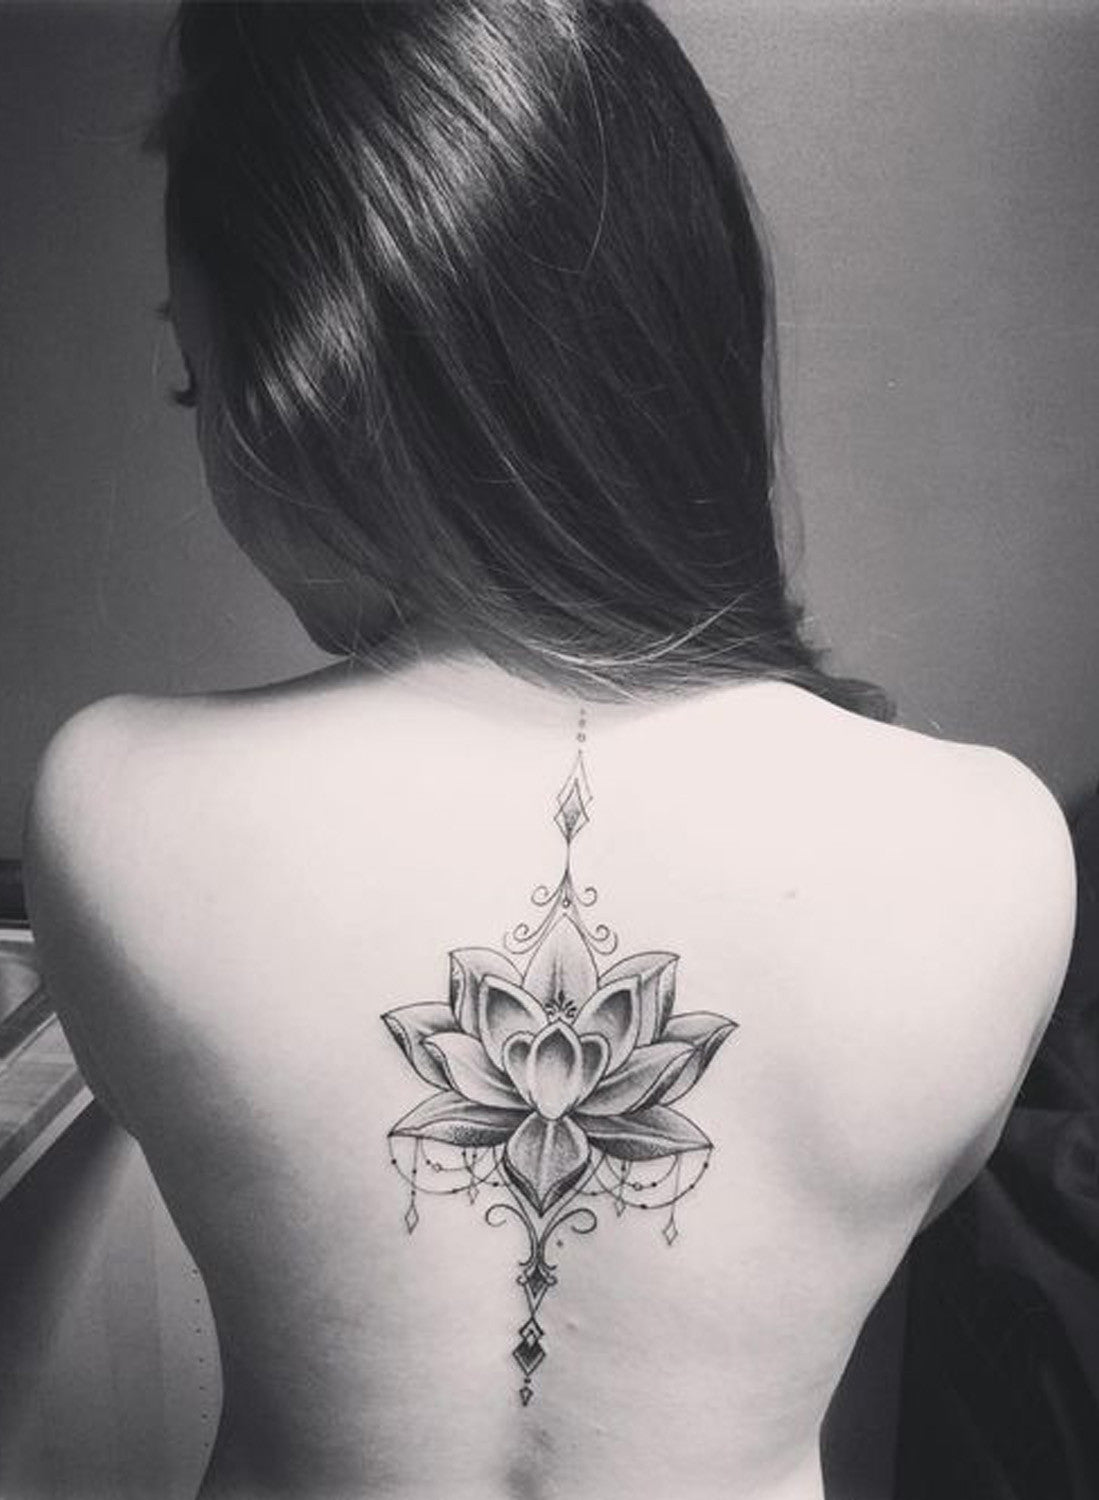 10 Spine Tattoo Designs Ideas  Design Trends  Premium  Spine tattoos  for women Paisley flower tattoos Tattoos